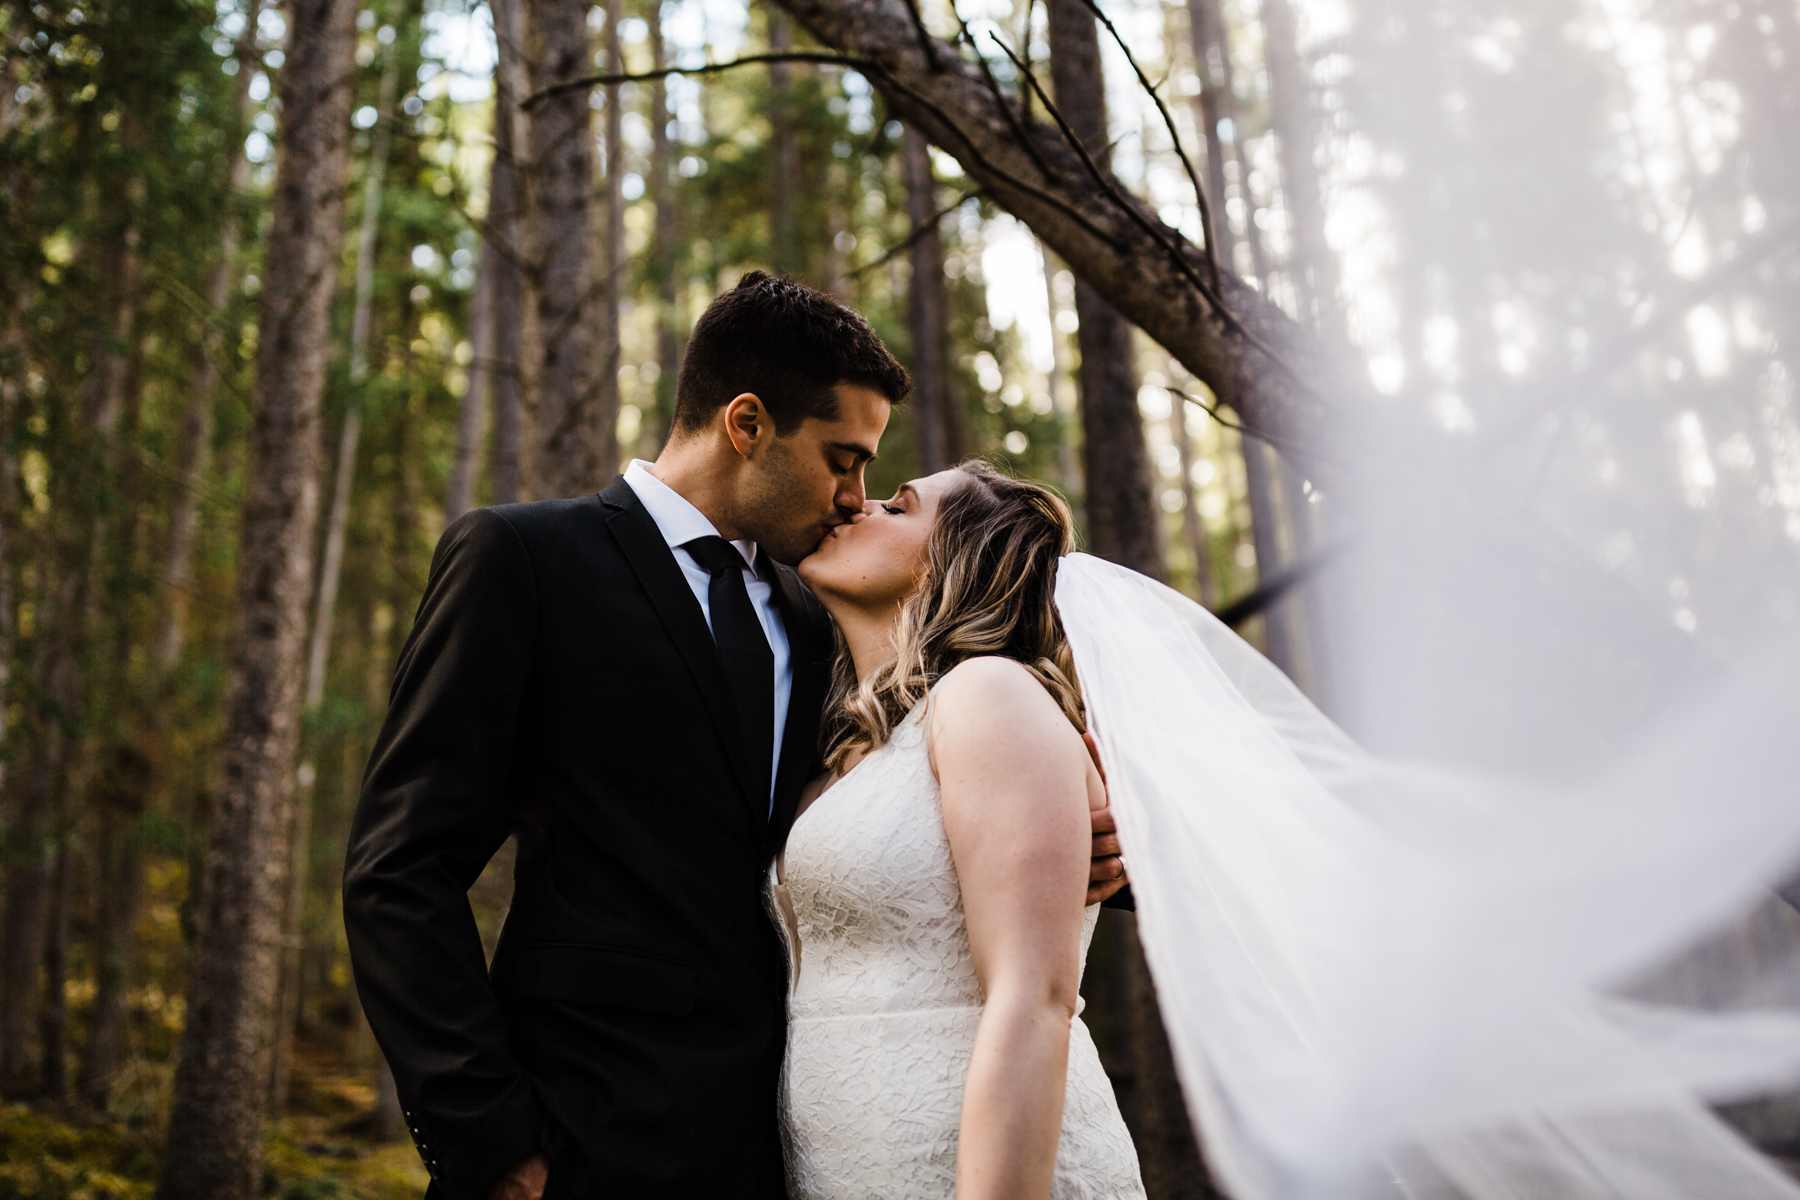 Banff Adventure Wedding Photographers for Lake Minnewanka Elopement - Image 16